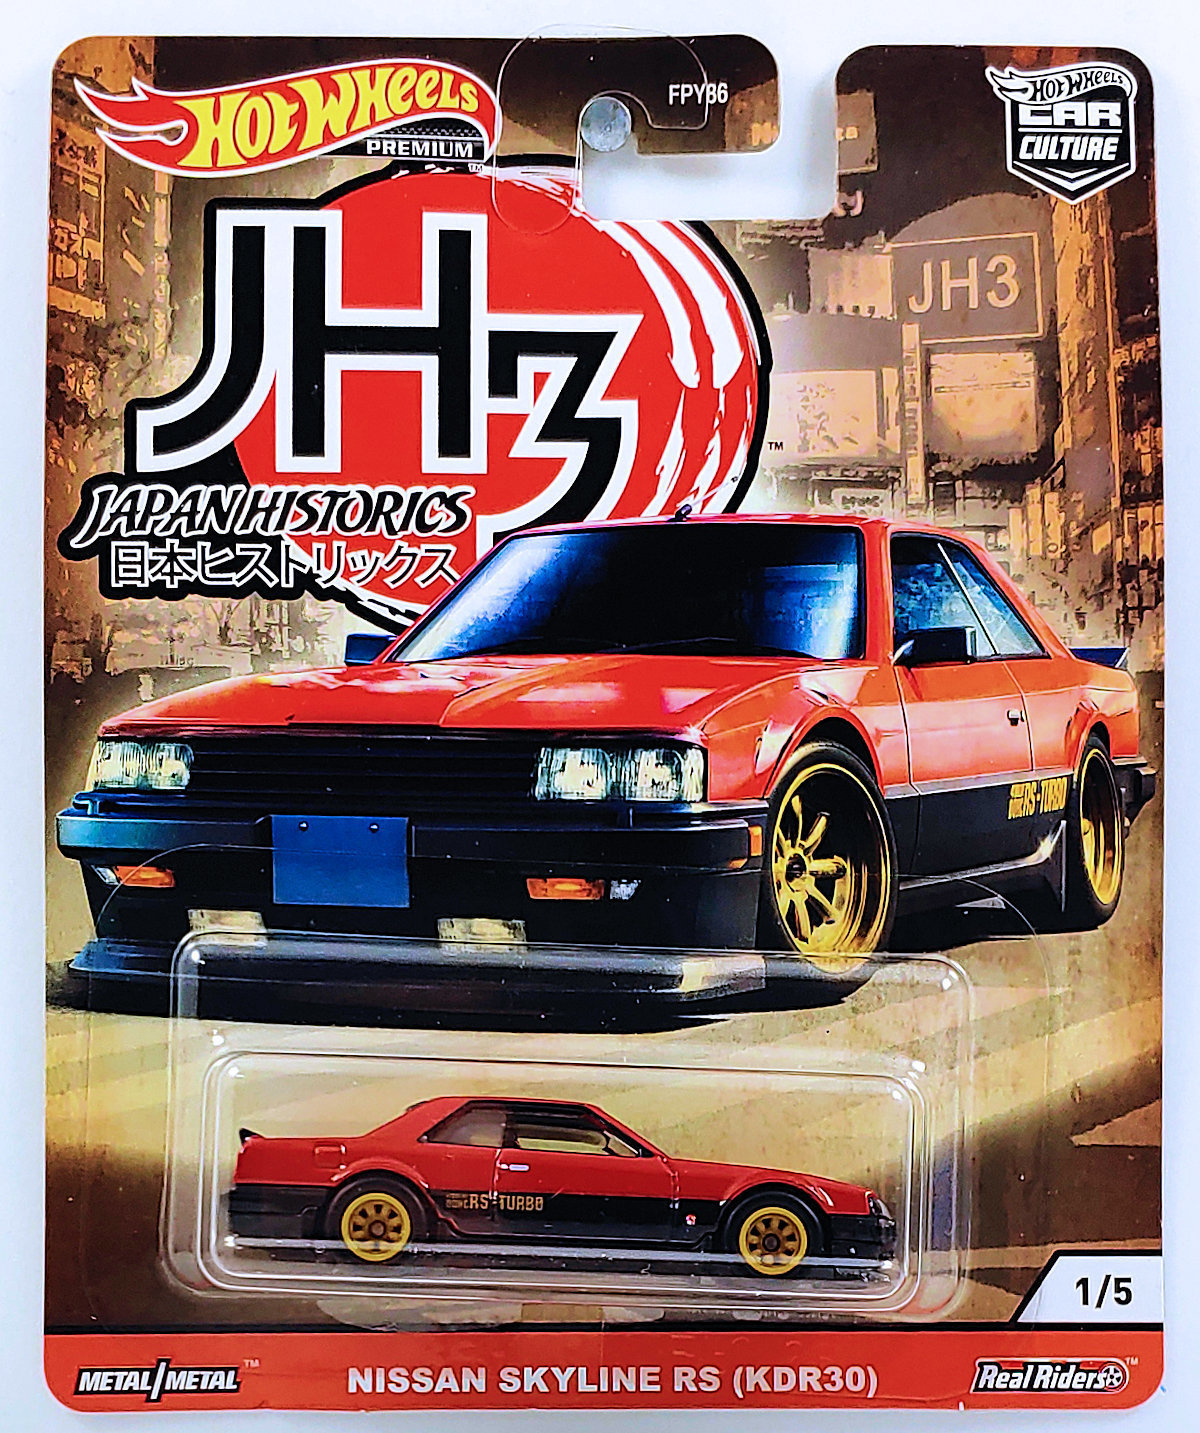 CAR #1/5 NEW LOT OF 3 Hot Wheels Japan Historics JH 3 Nissan Skyline RS KDR30 